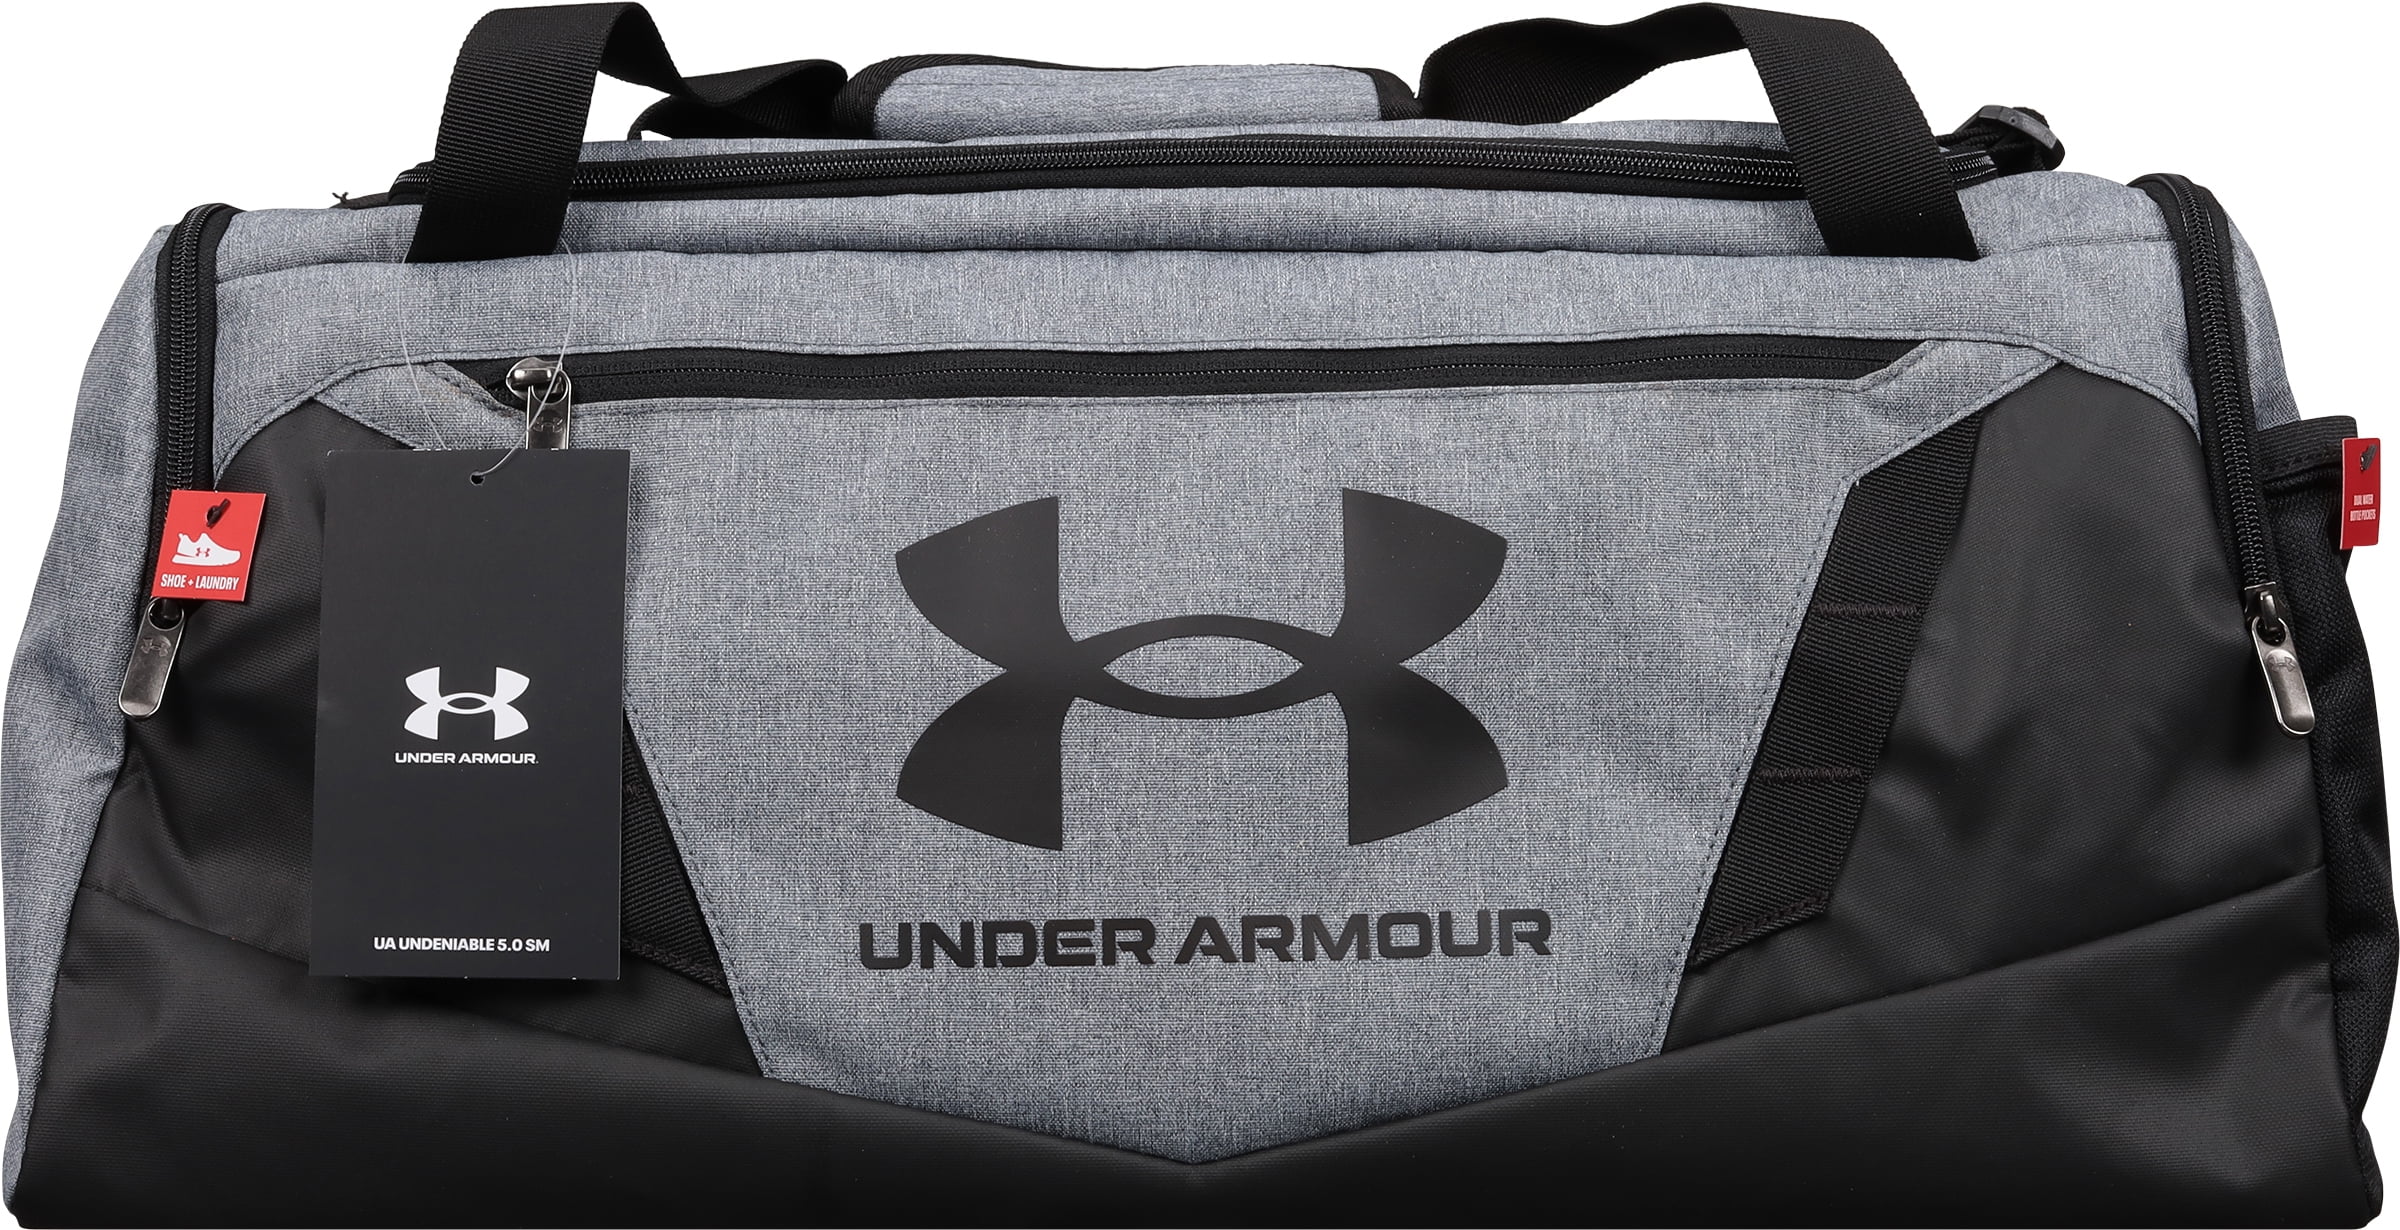 Under Armour Undeniable 5.0 Xs Duffle Bag - Purple, OSFM